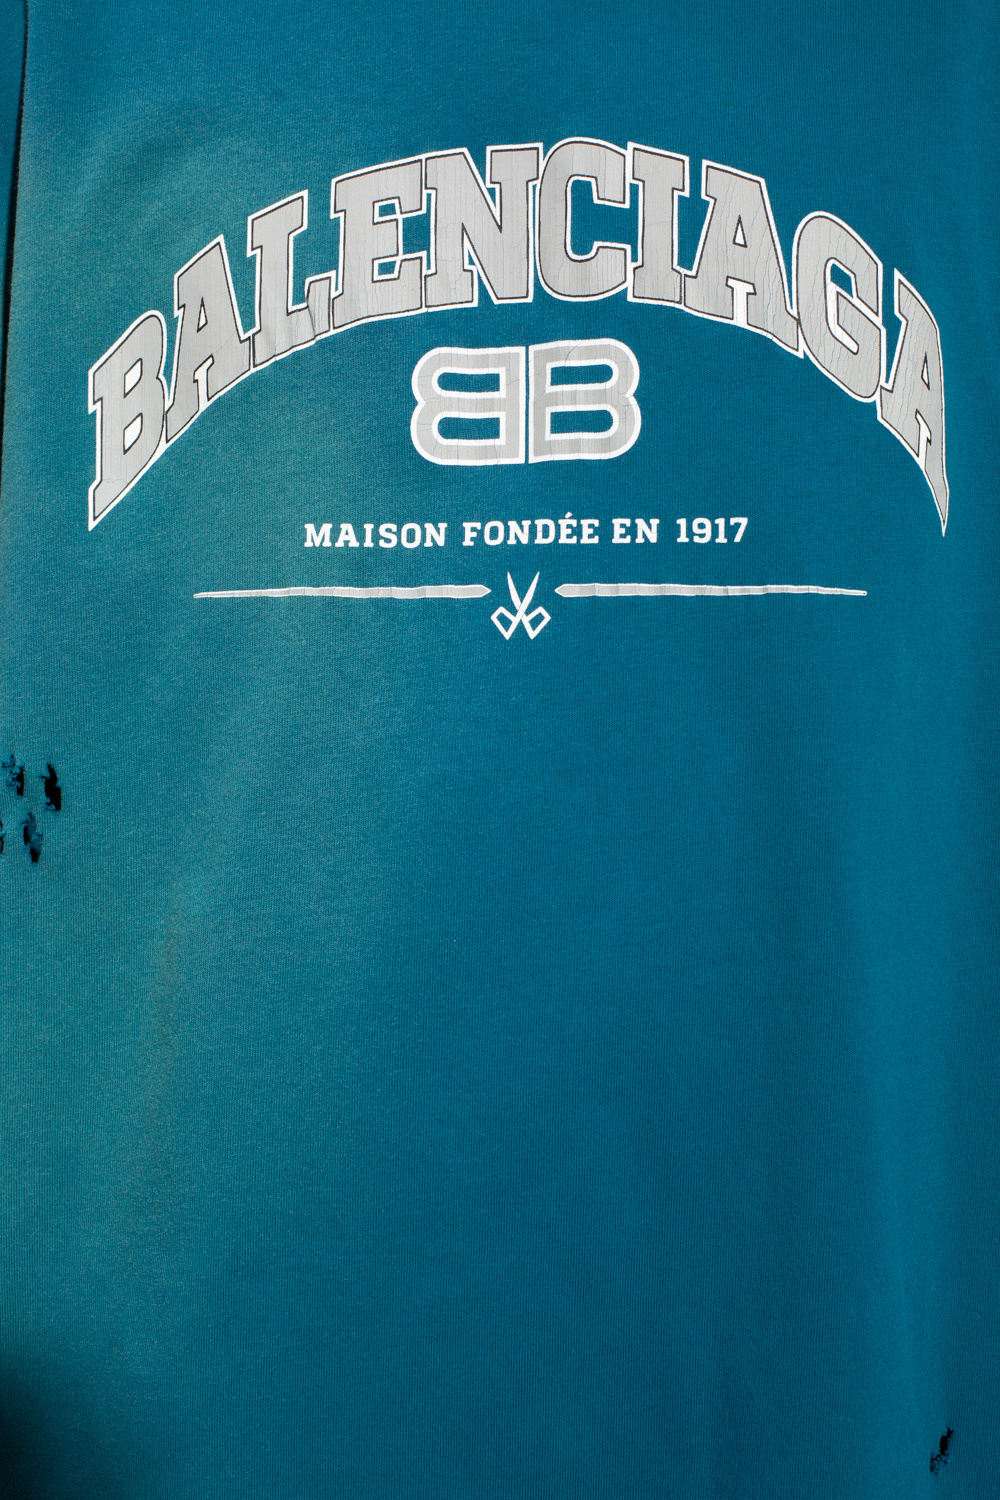 Shop Balenciaga Maison Balenciaga T-shirt Medium Fit